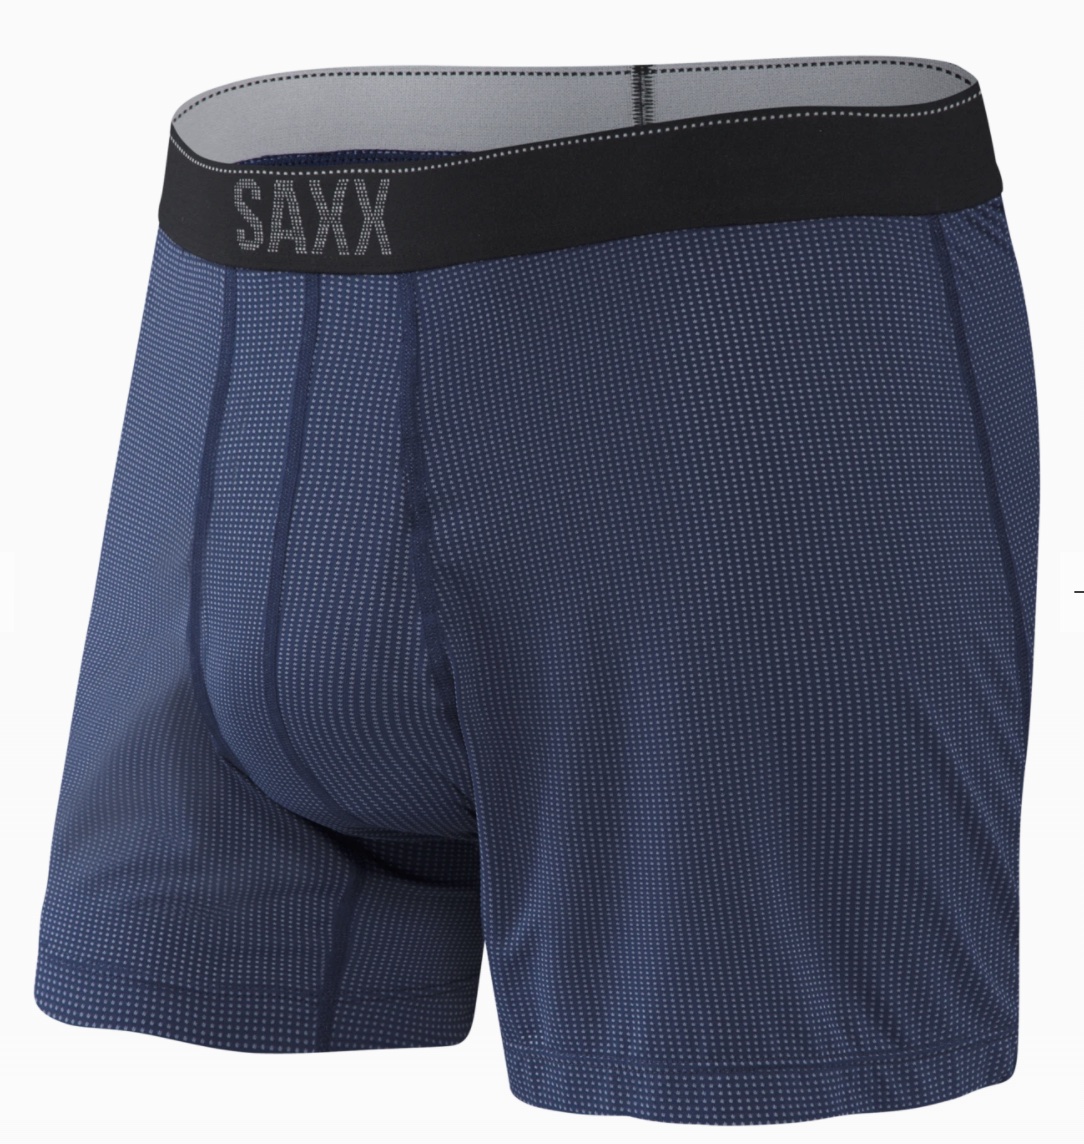 SAXX boxer shorts.